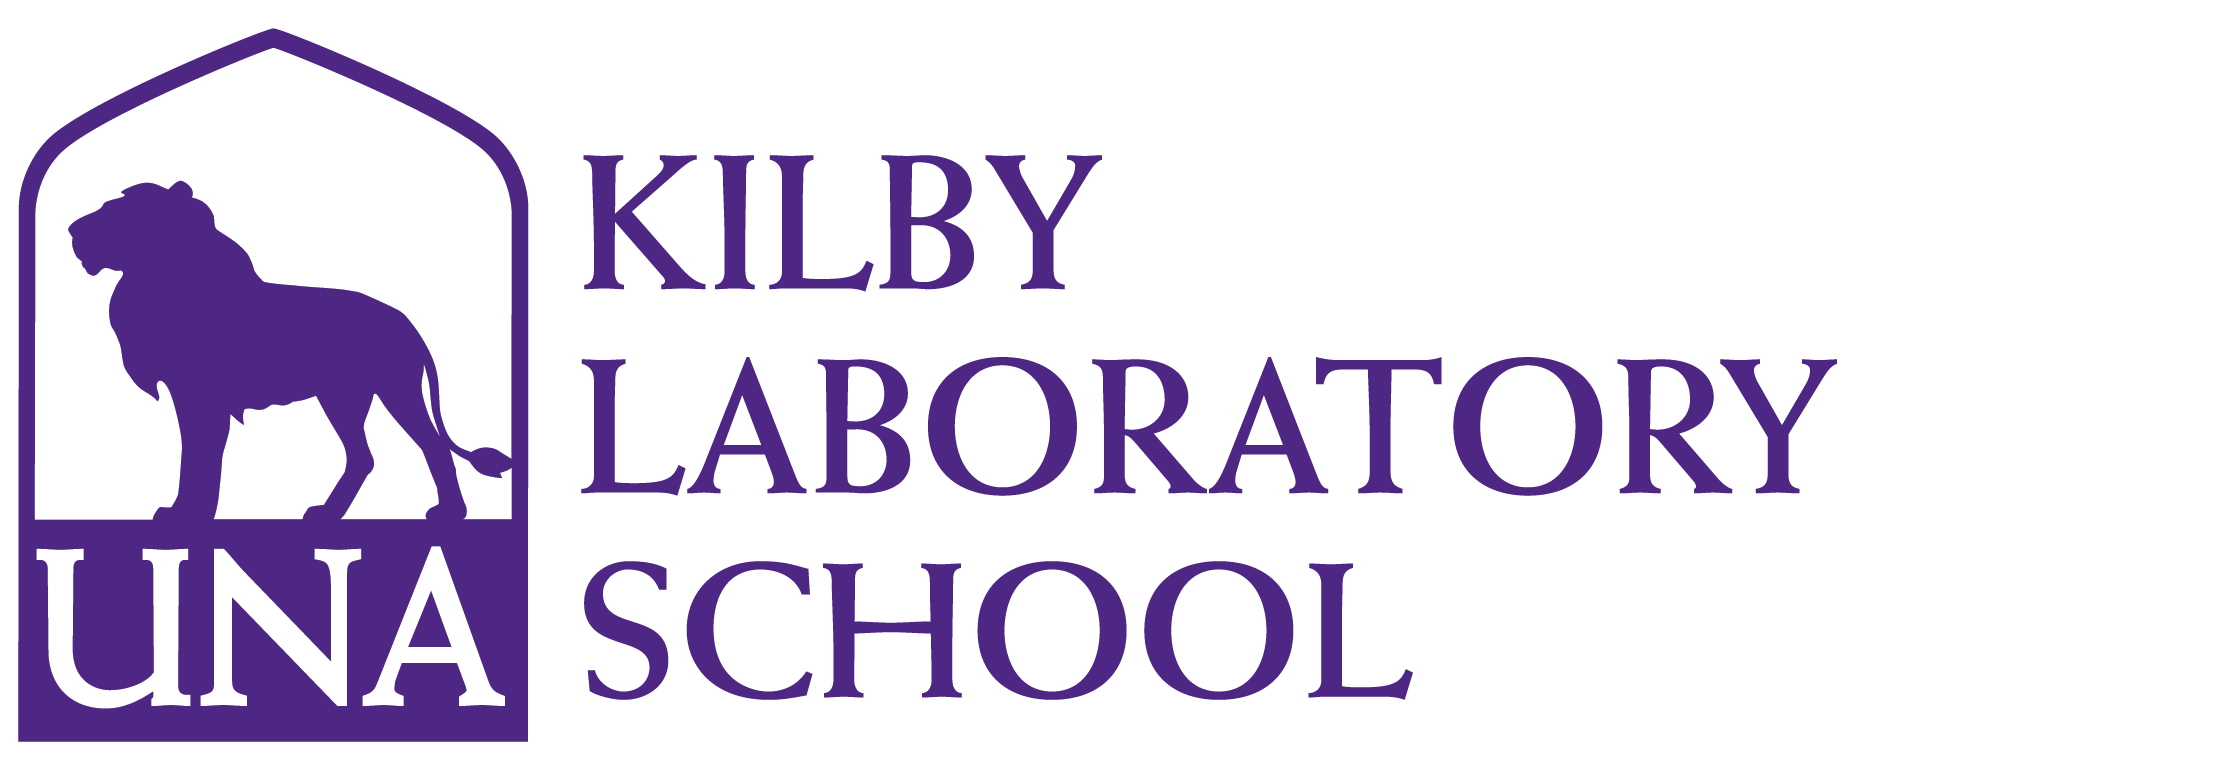 kilby laboratory school logo 3